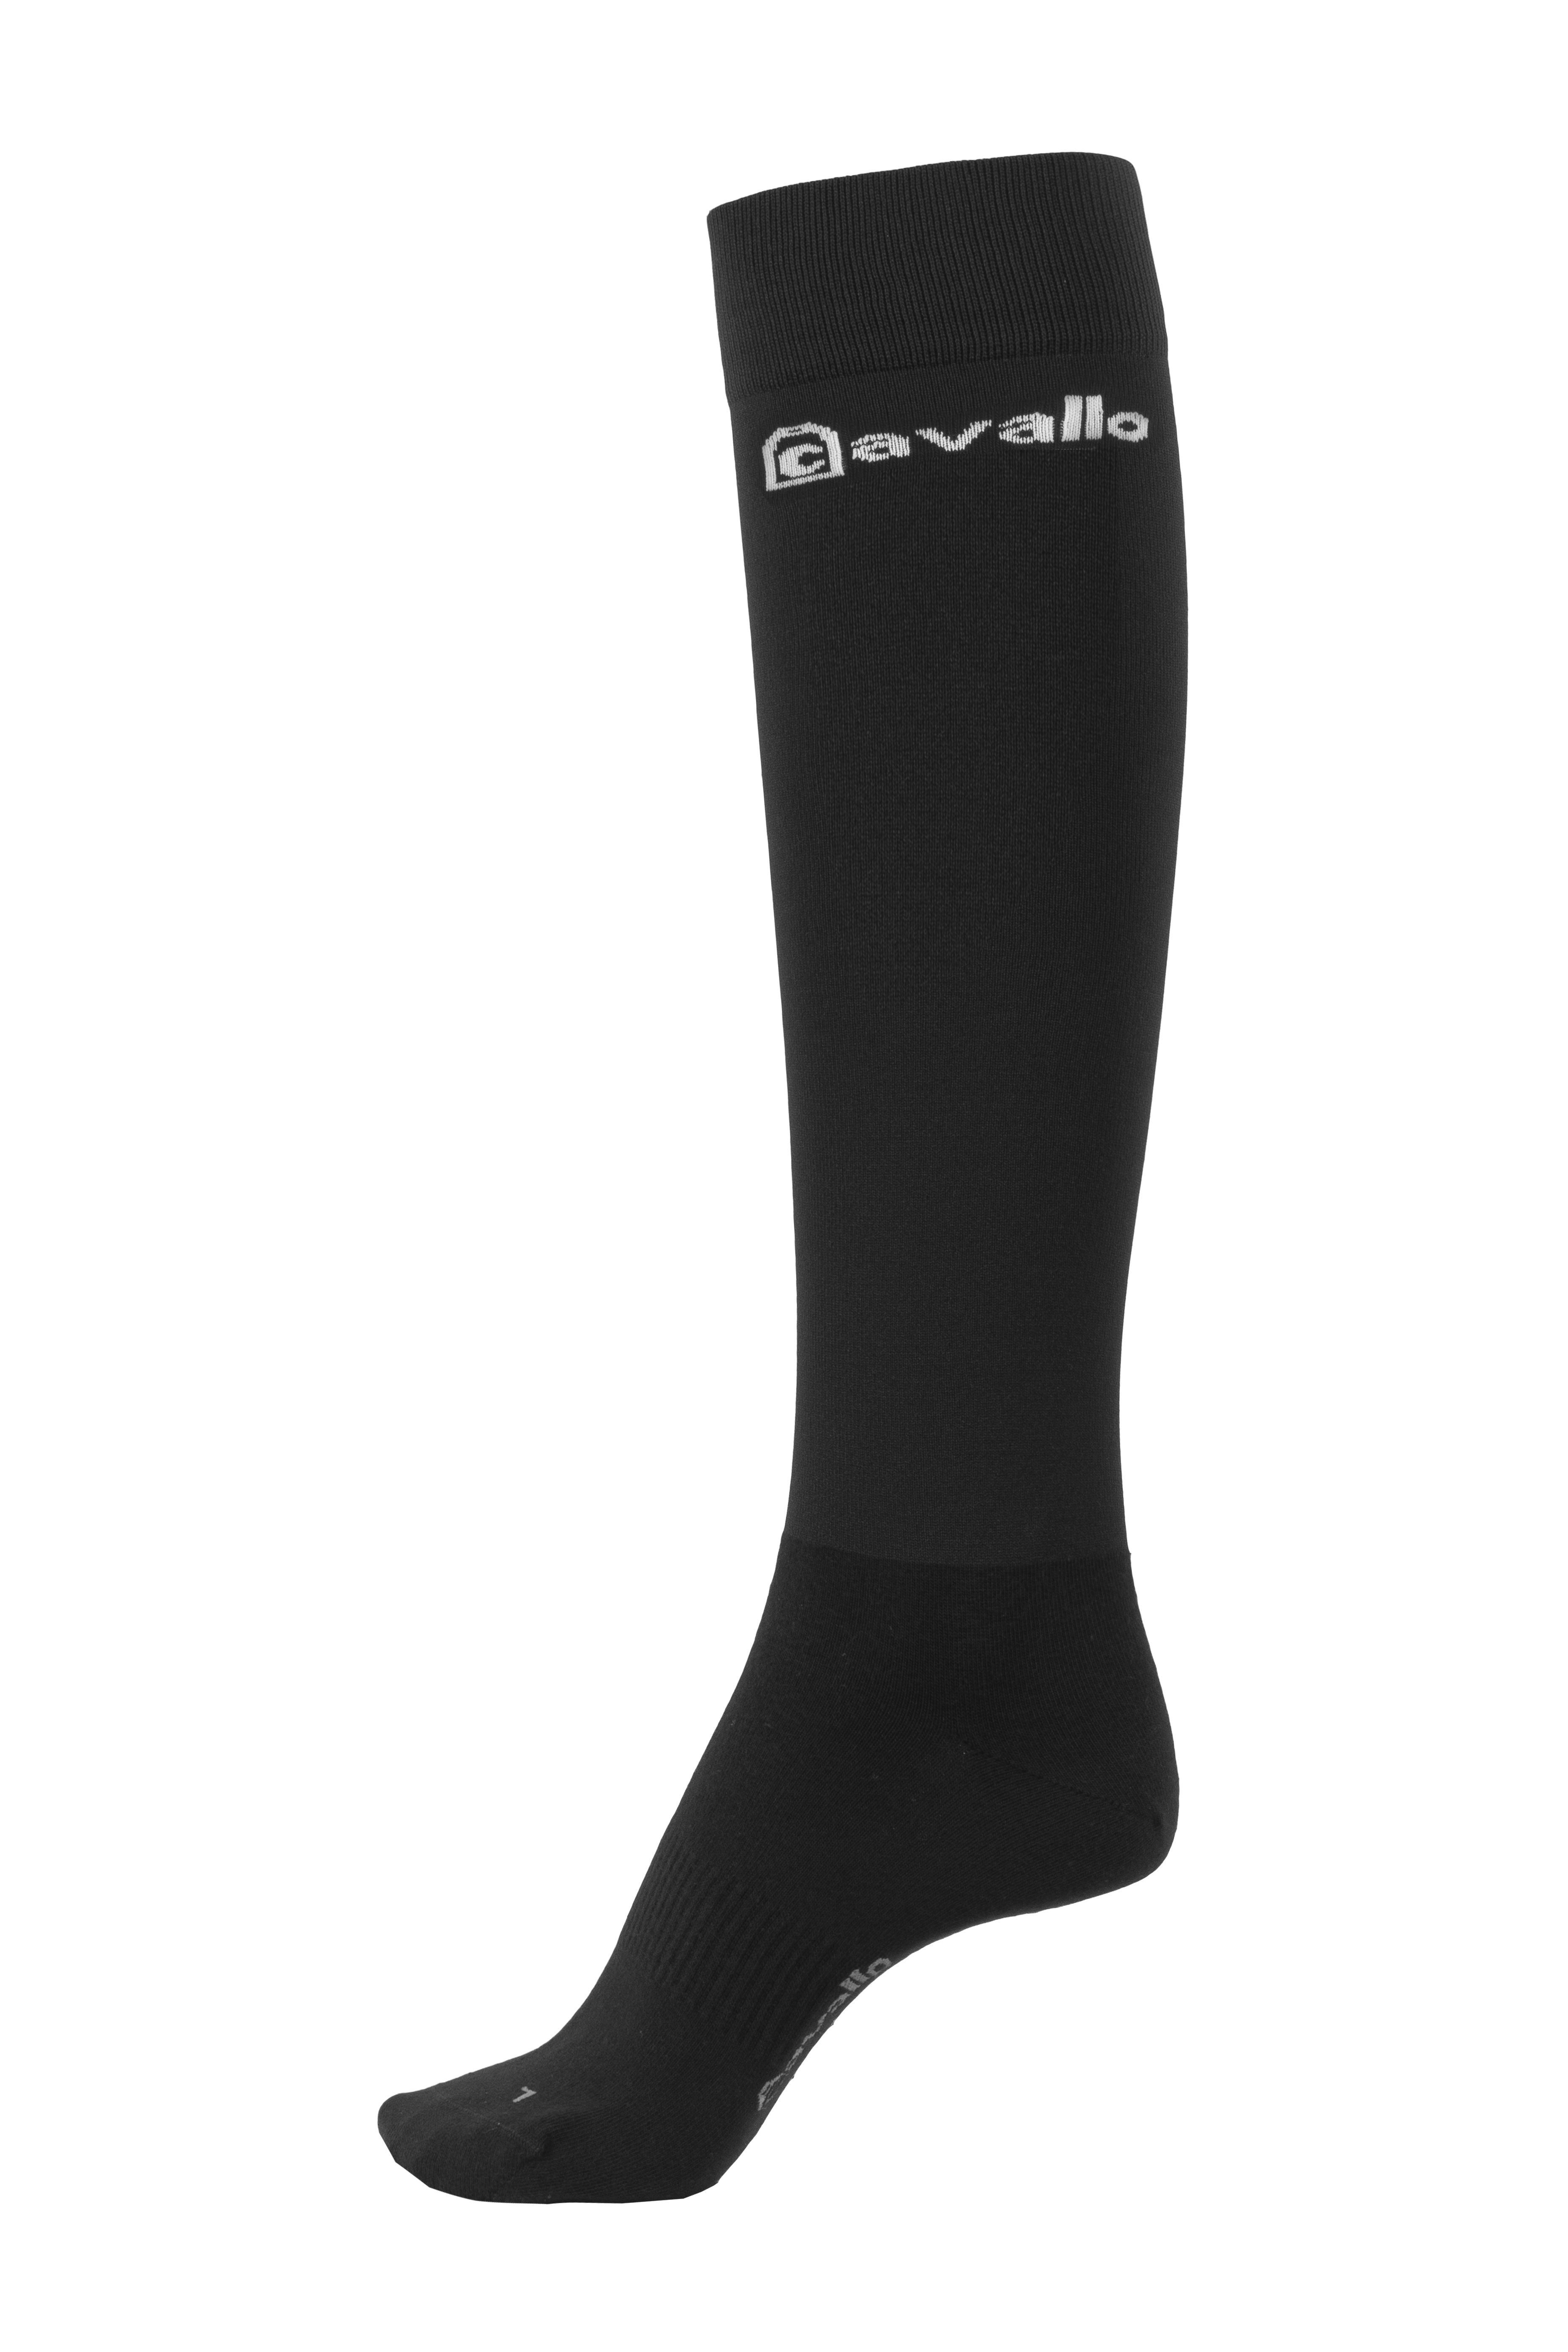 Cava Logo Riding Socks - Black